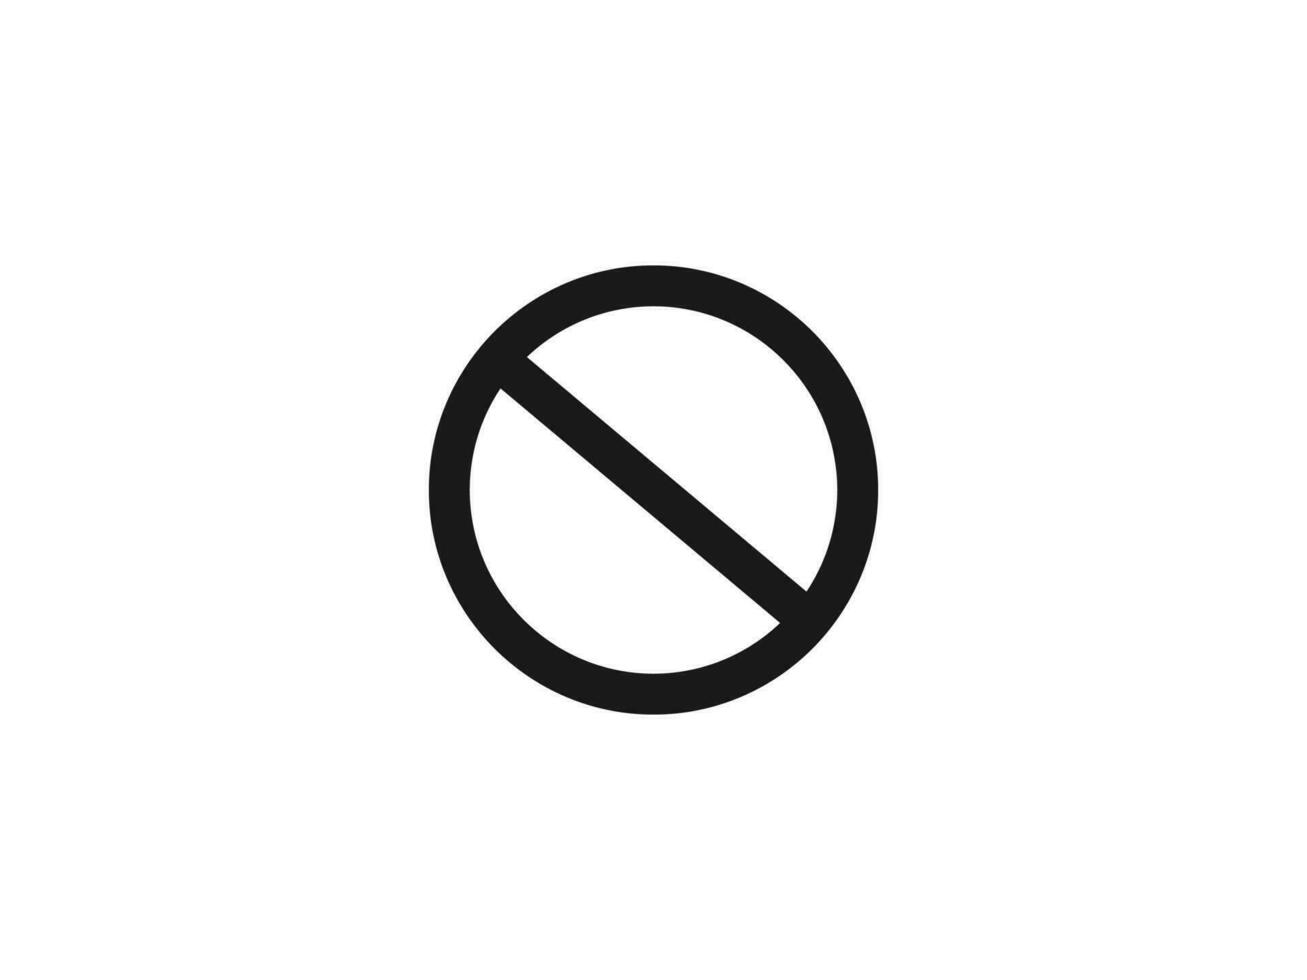 stop icon vector symbol. prohibited, anti, ban symbol vector